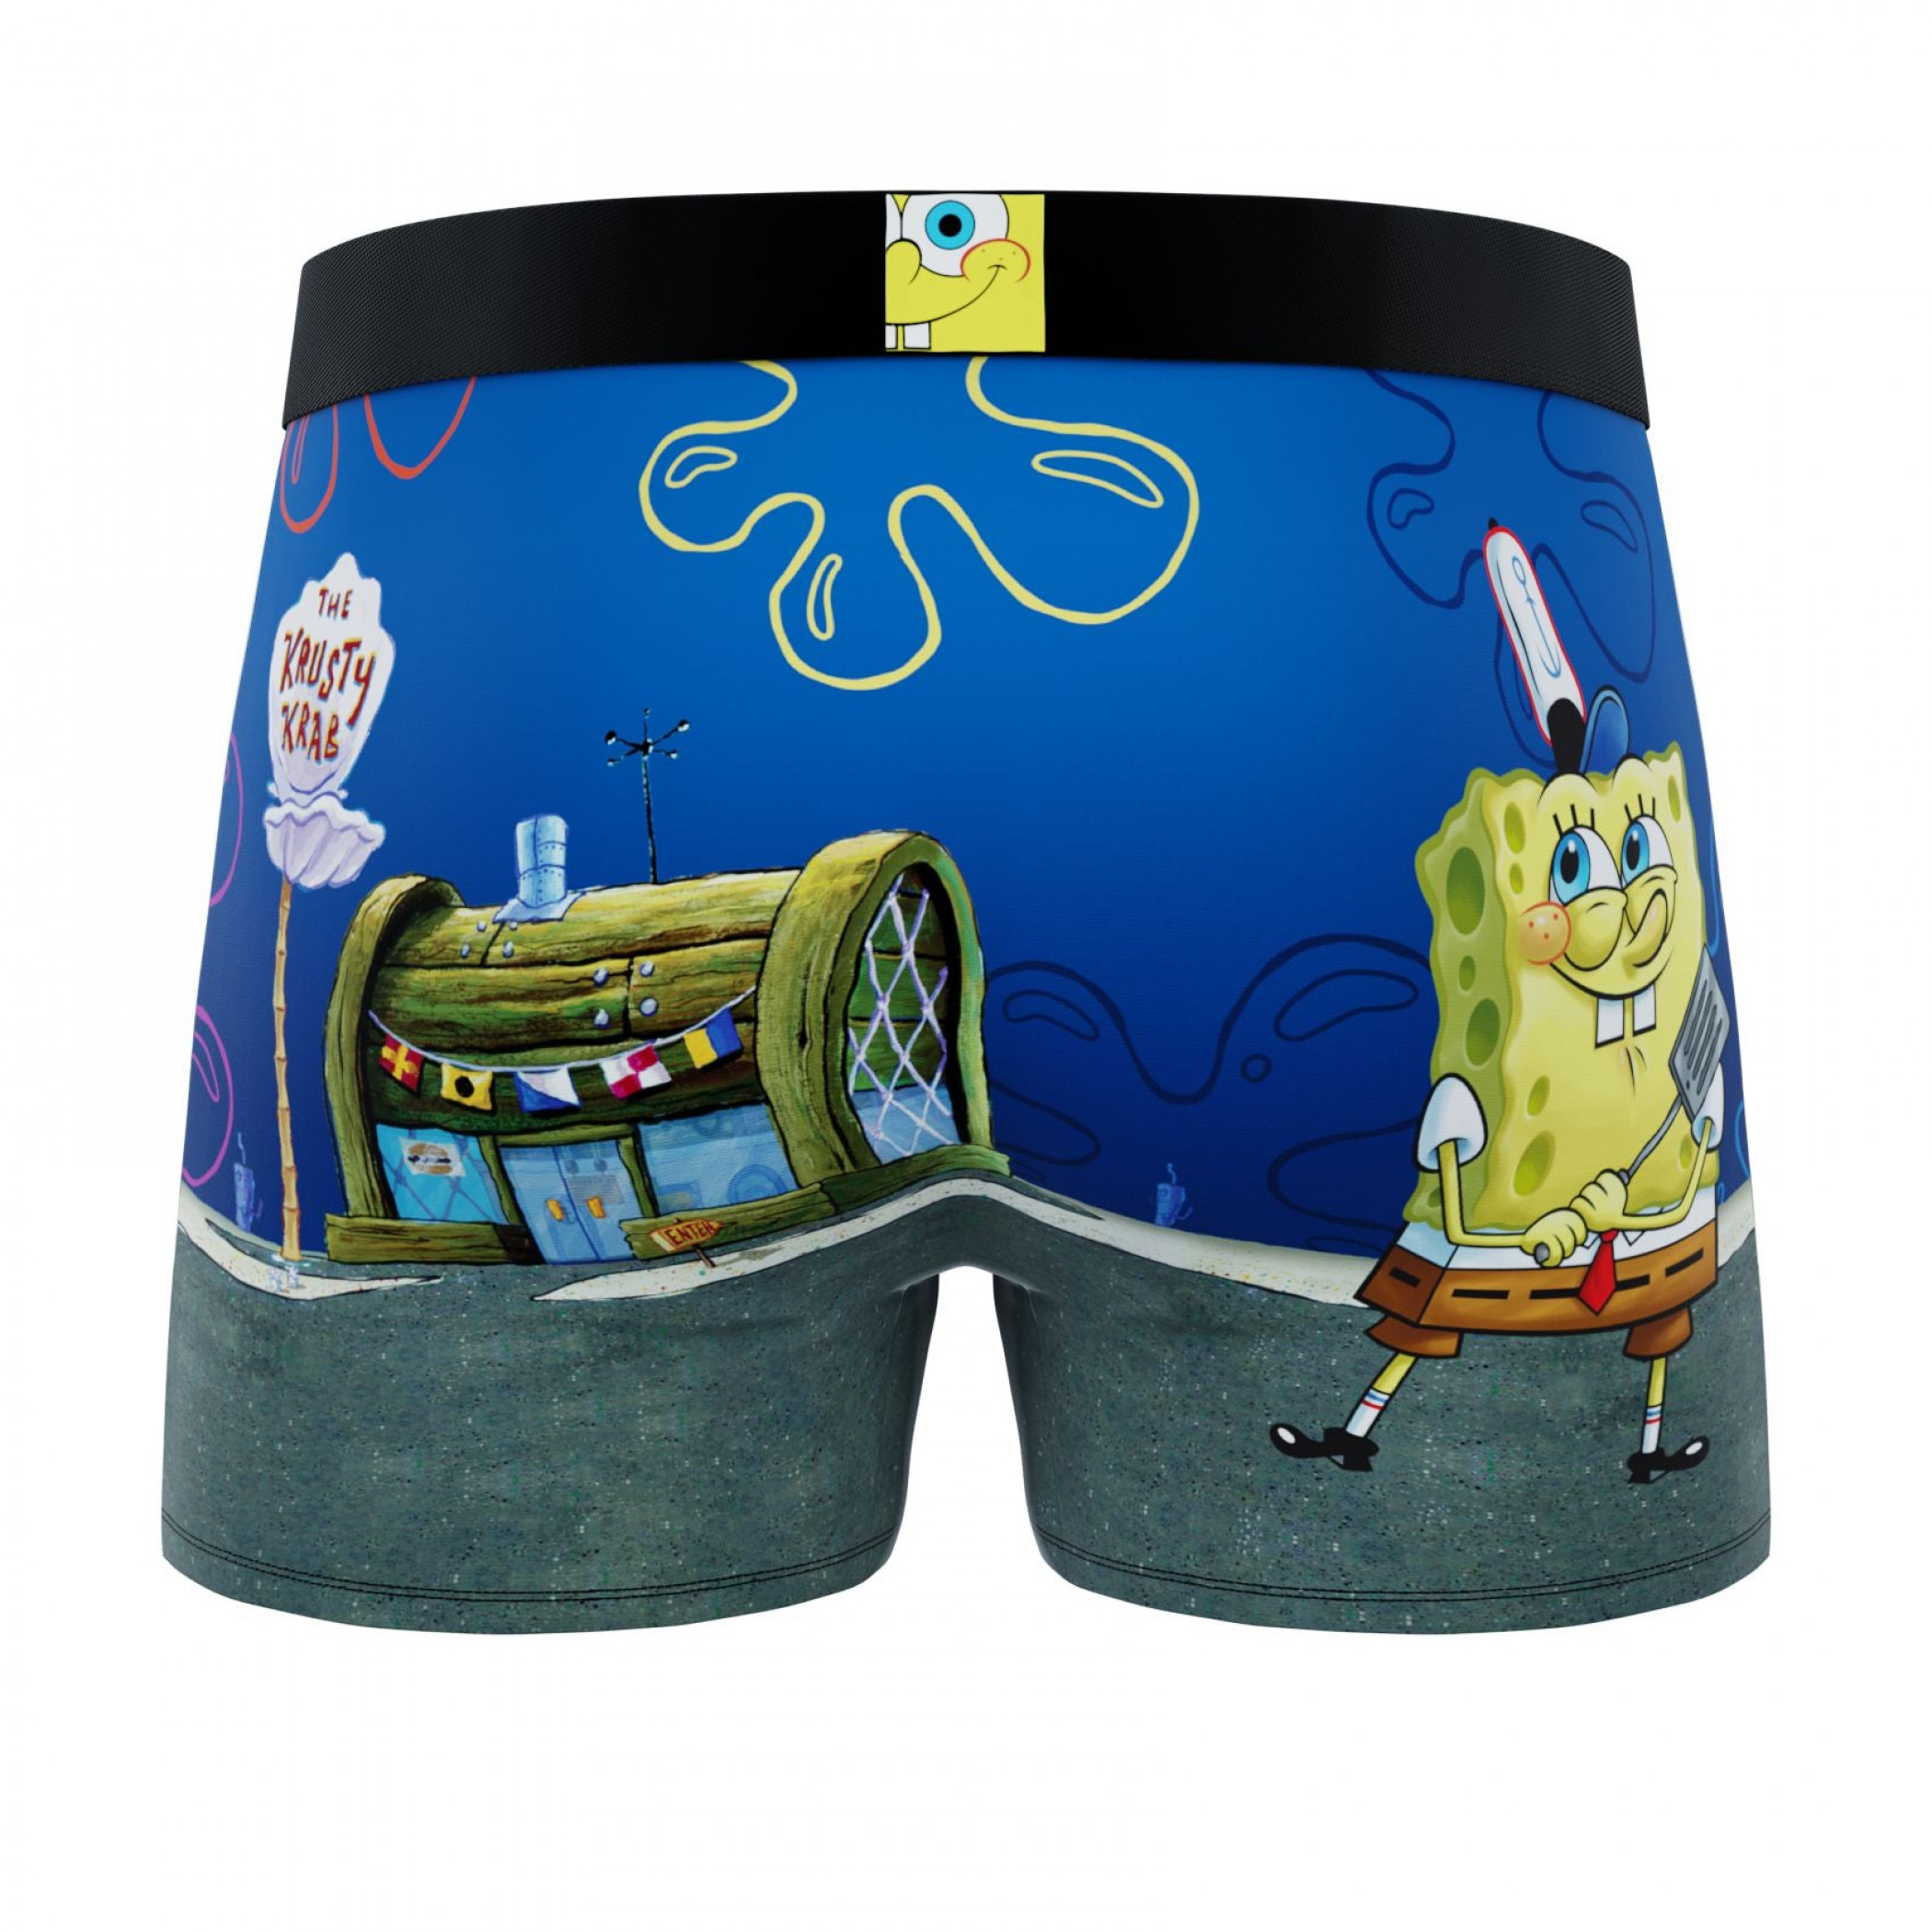 SpongeBob SquarePants The Krusty Krab Men's Crazy Boxer Briefs Shorts